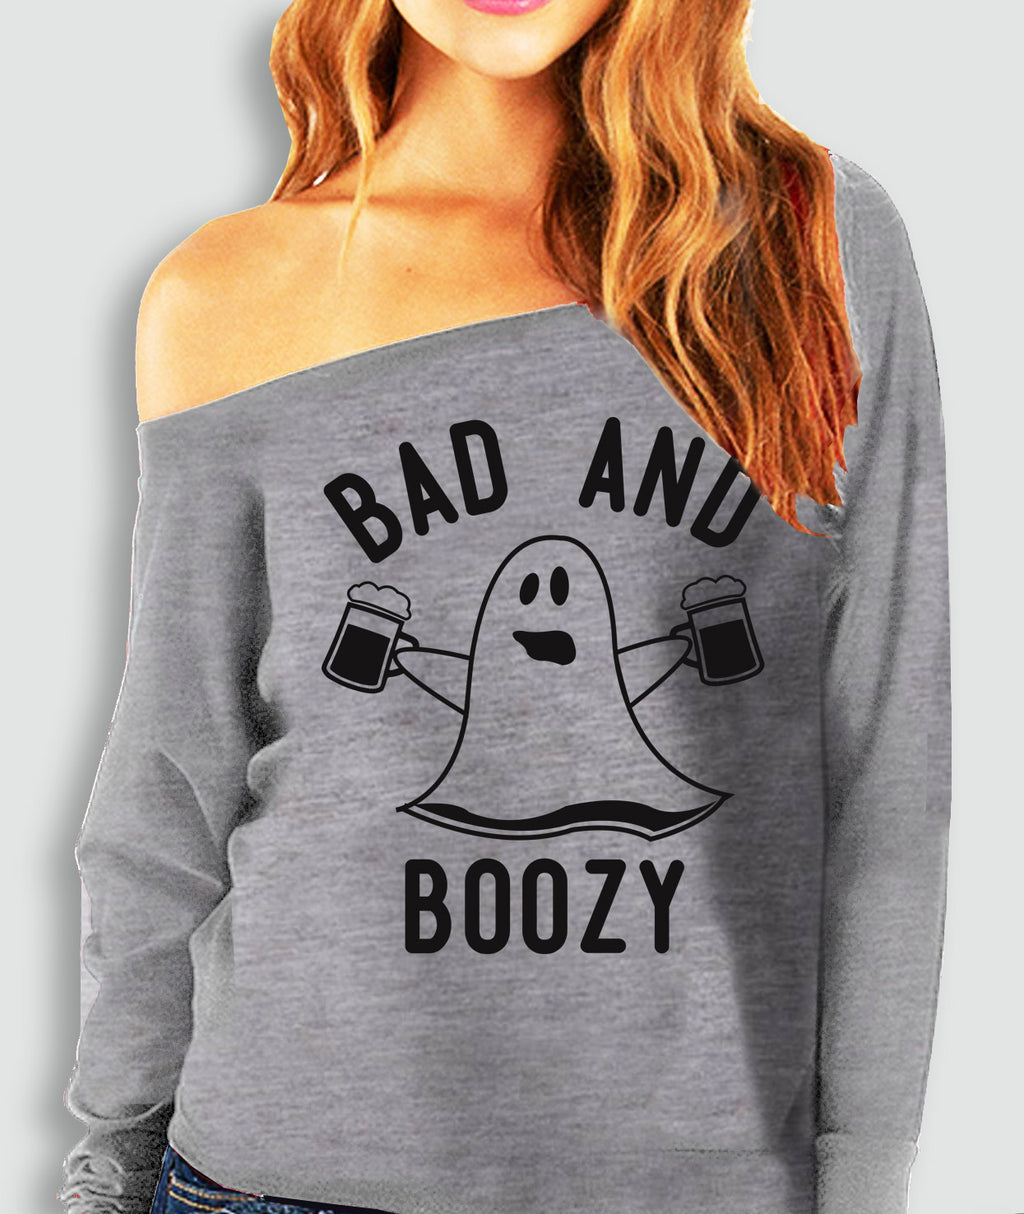 BAD & Apparel – NobullWoman Heather Off-Shoulder BOOZY Sweatshirt Ghost Halloween Gray